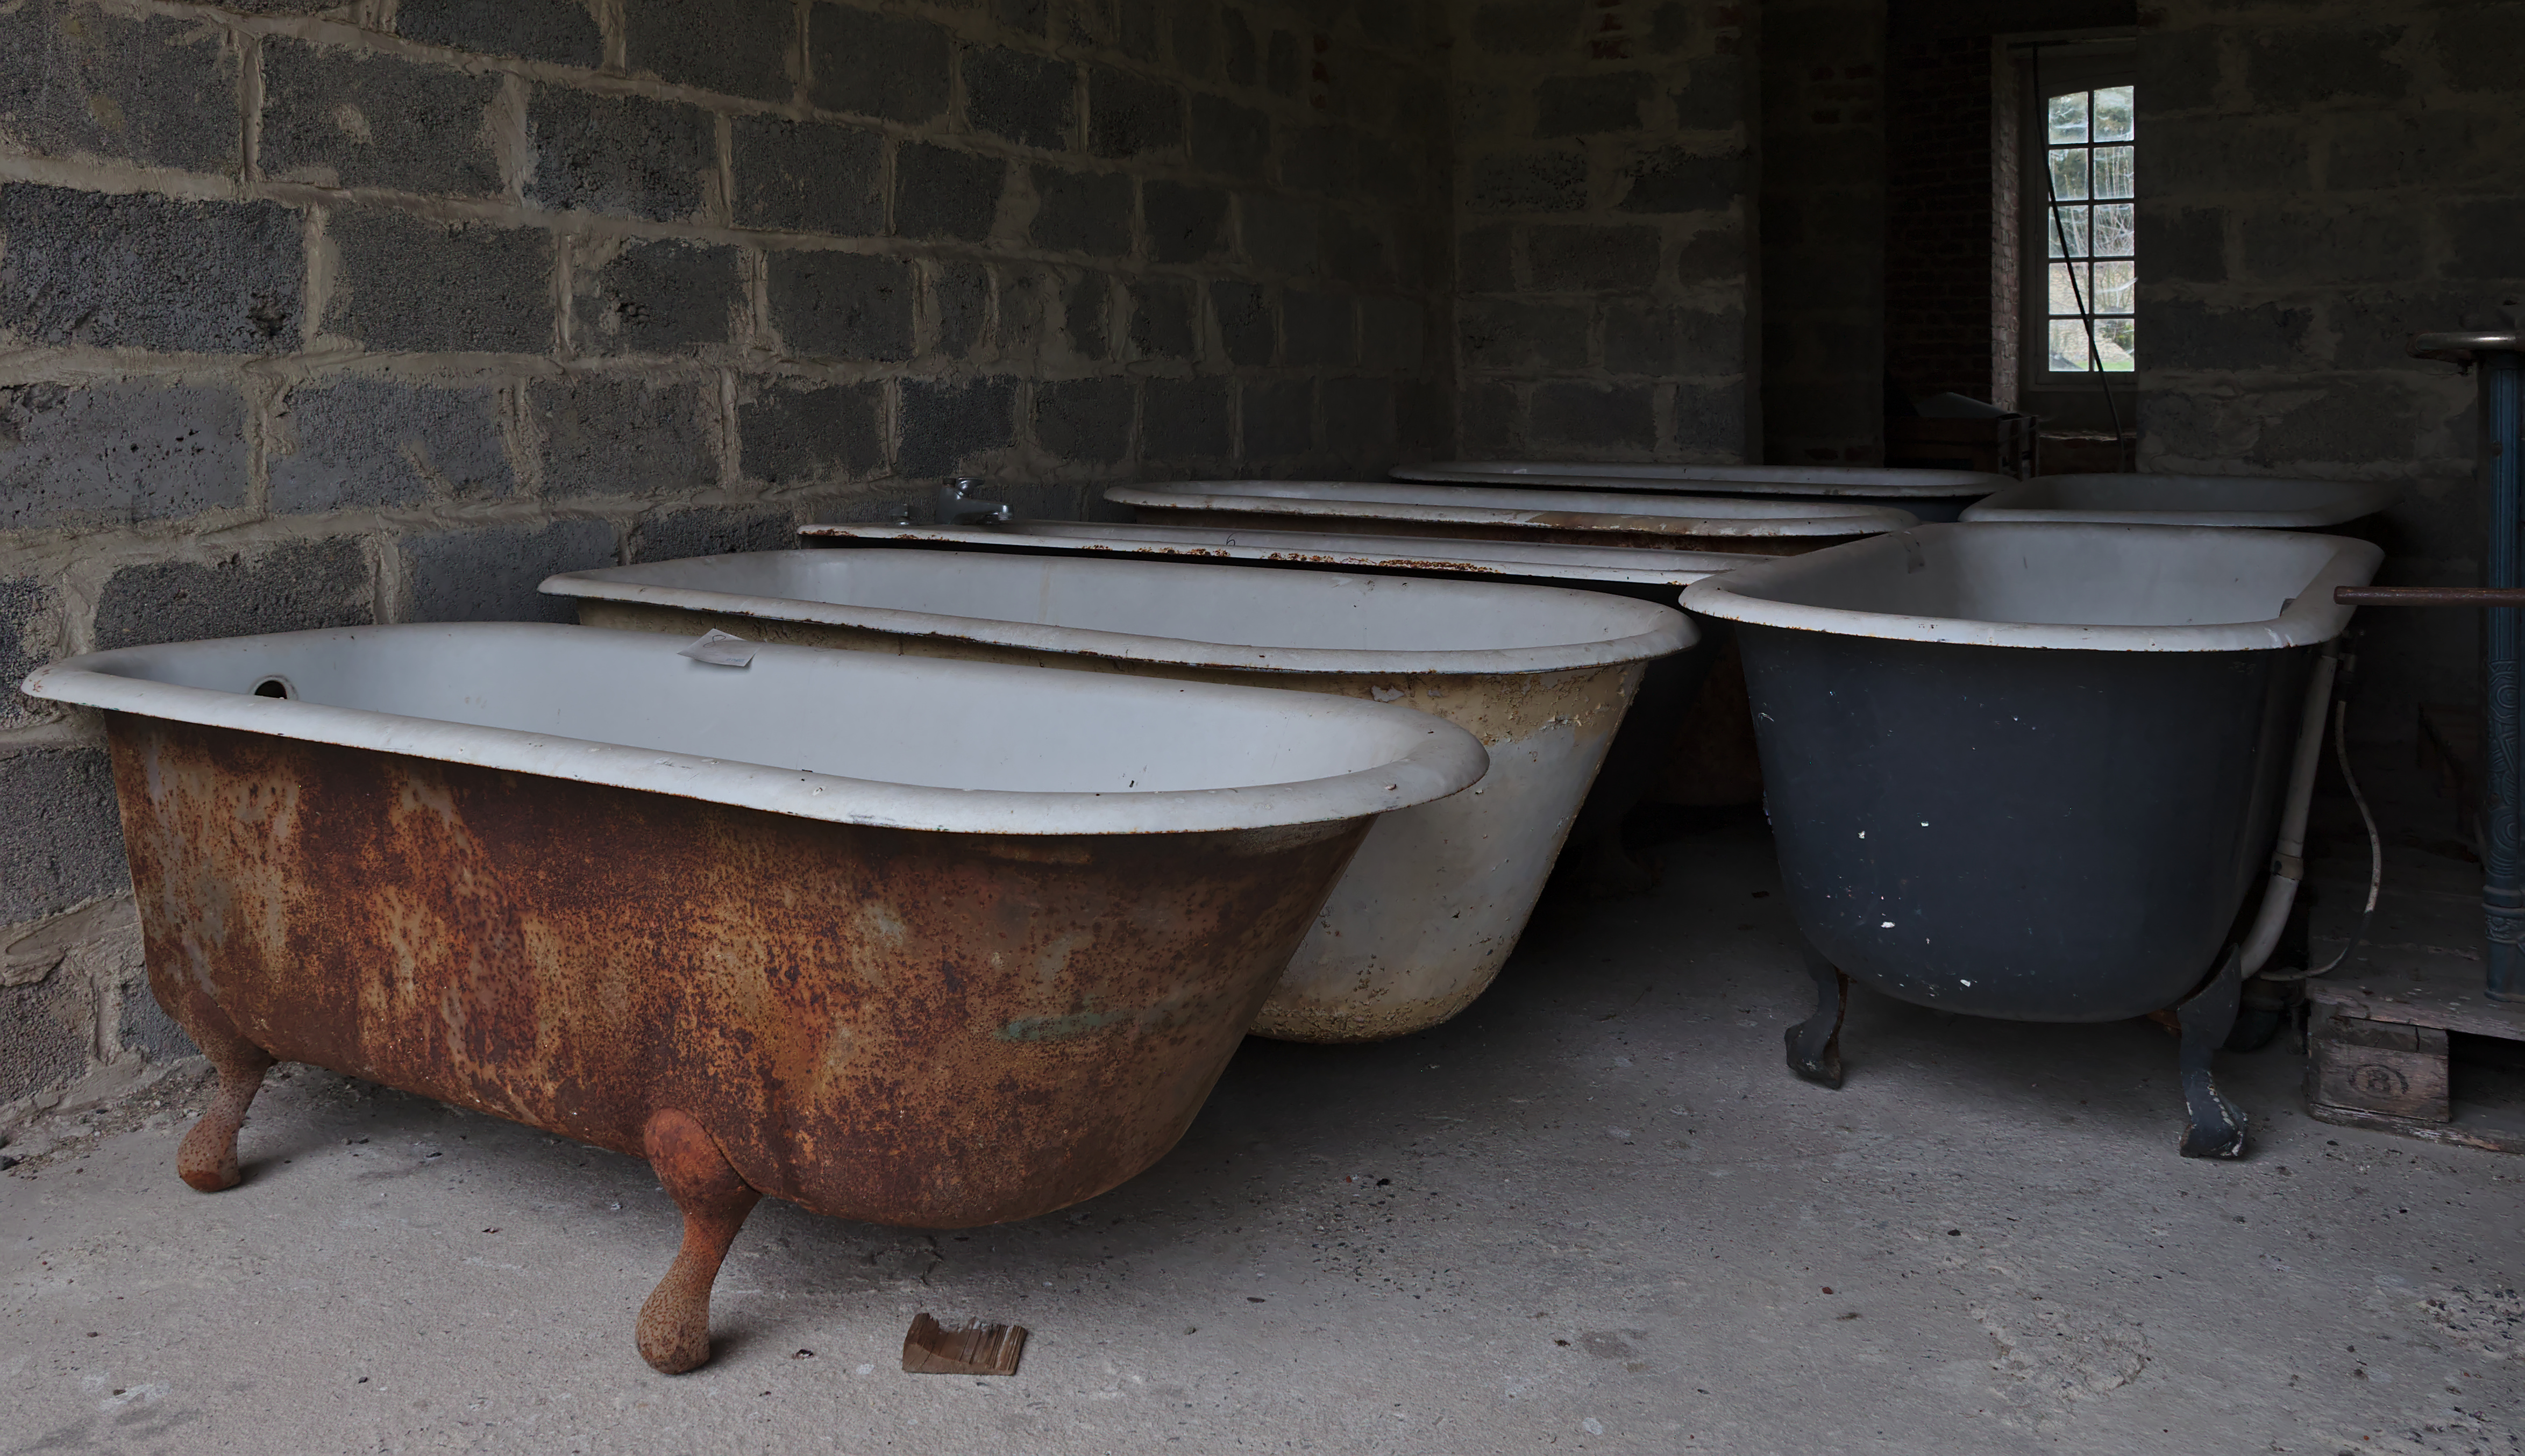 Bathtubs in Chateau de l'Hermitage, Hauts-de-France (DSCF4938)